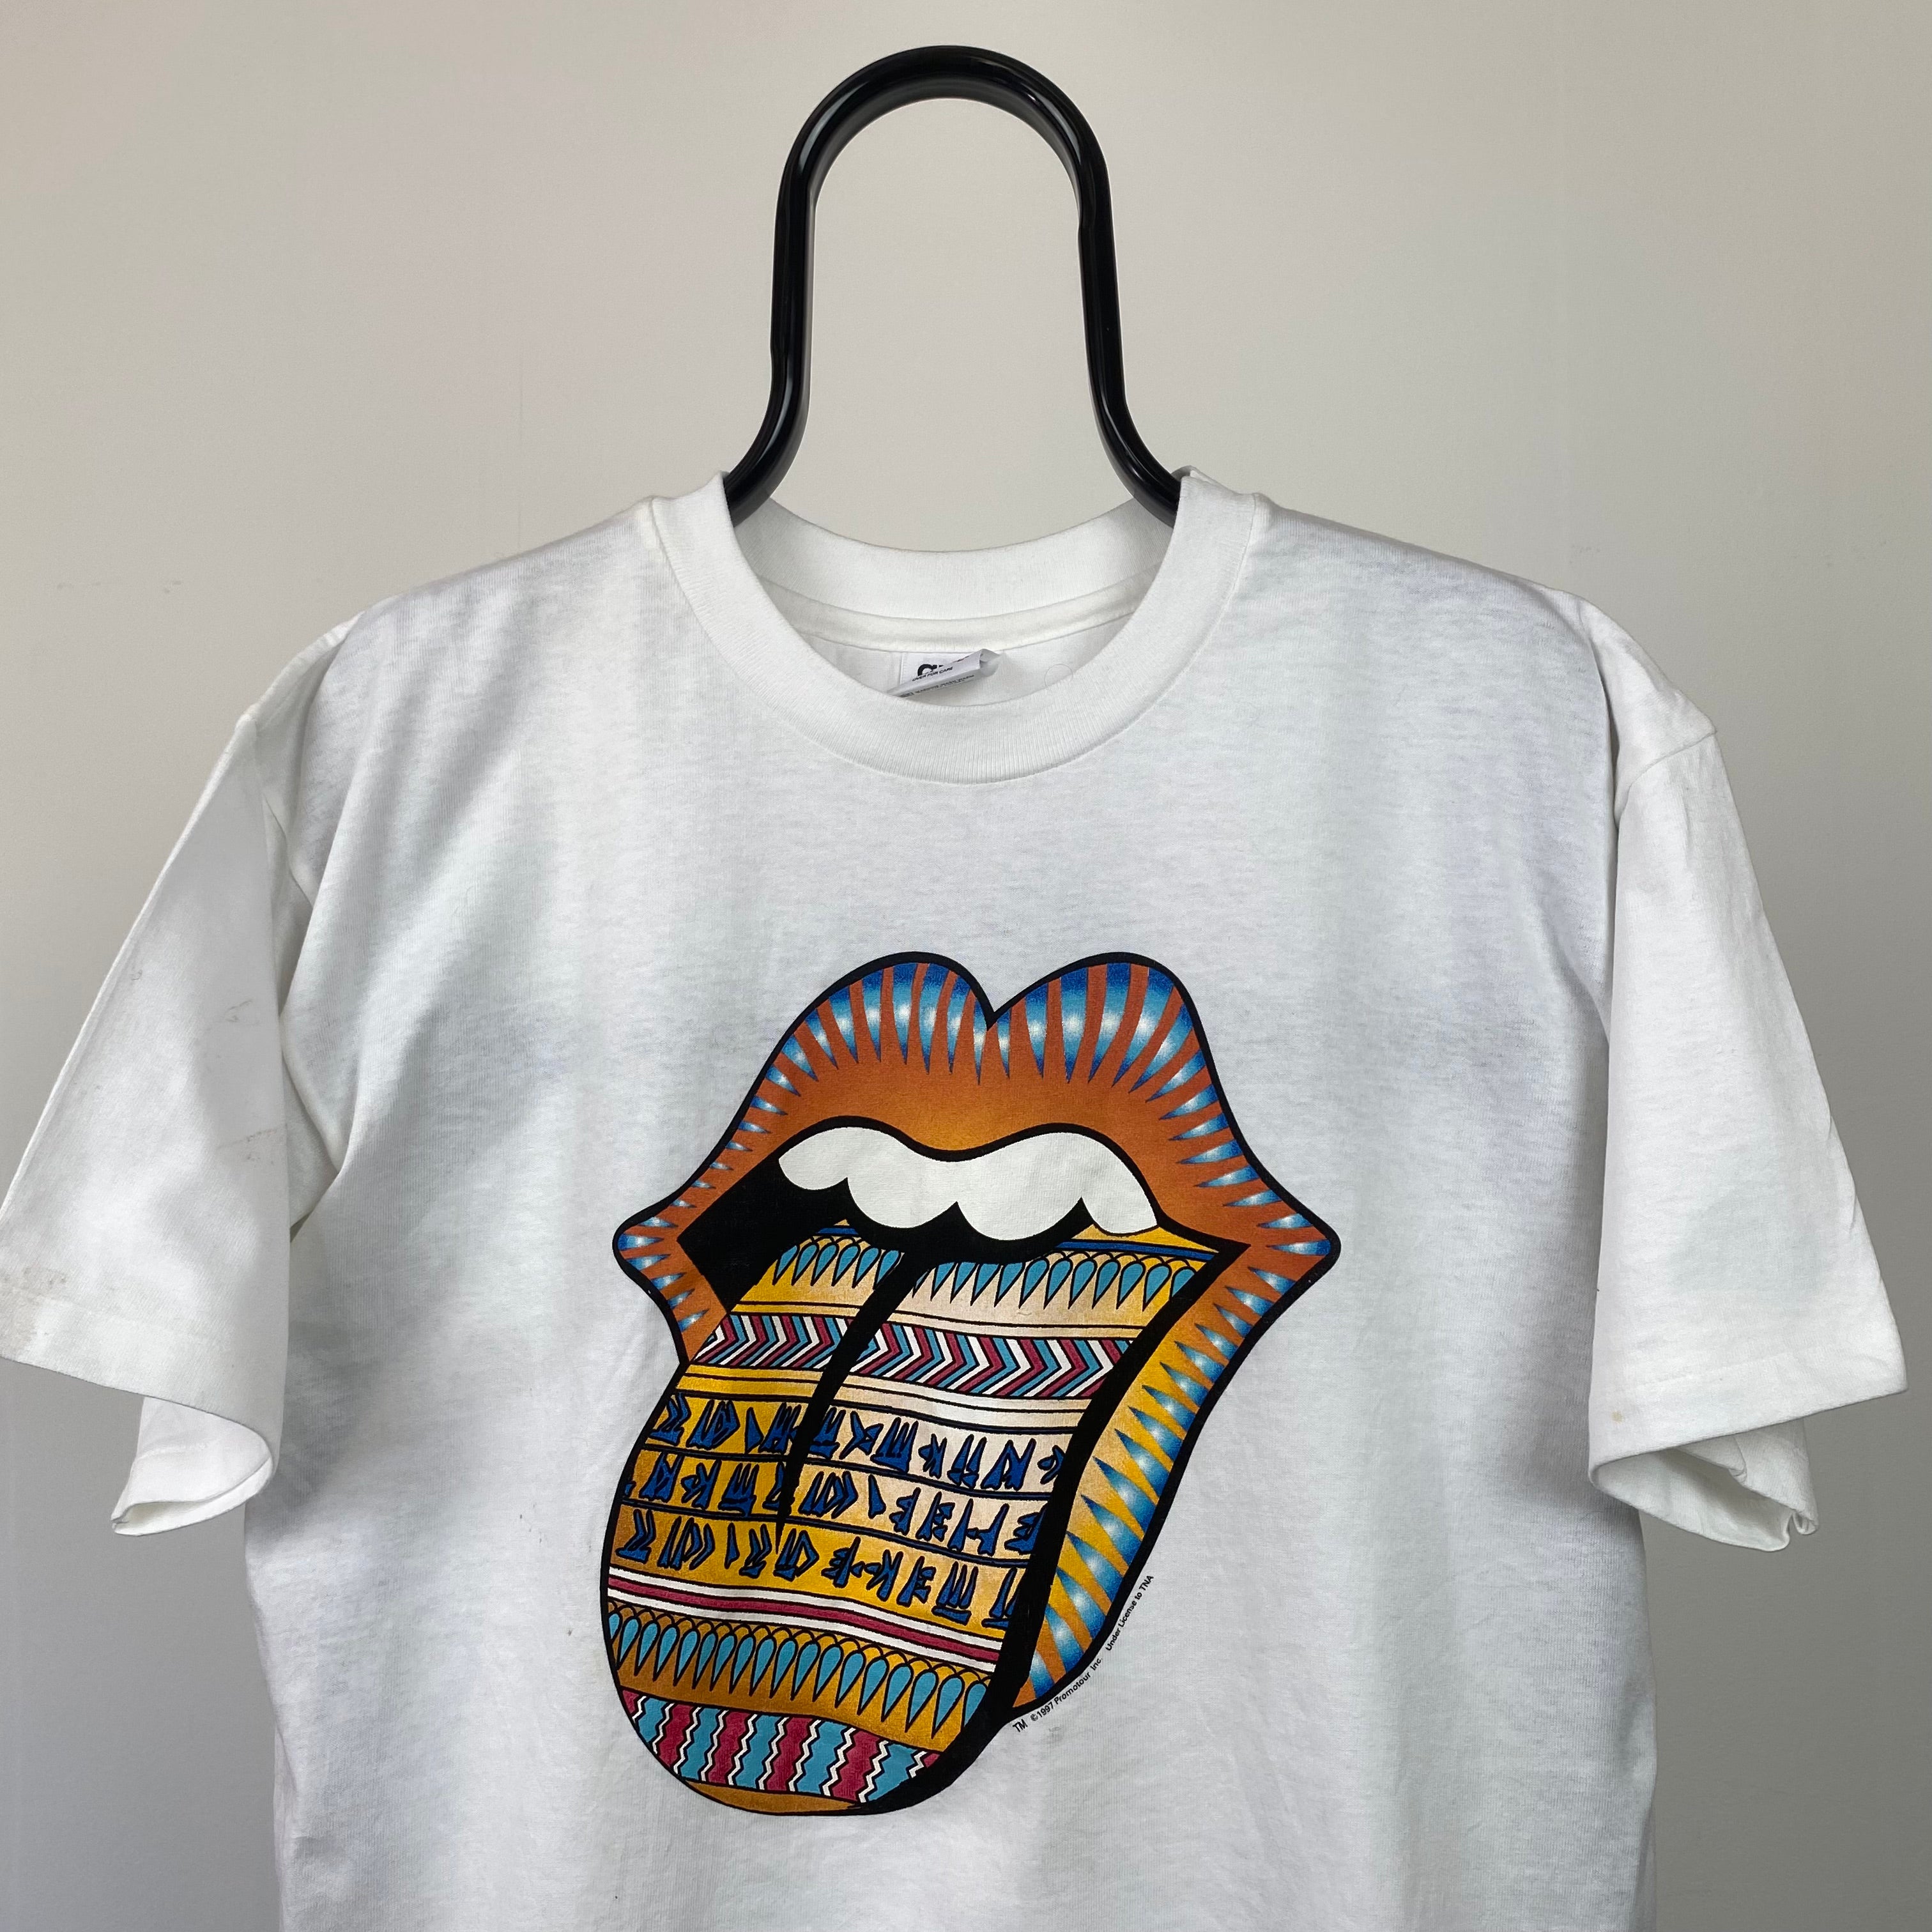 1997 Retro Anvil Rolling Stones T-Shirt White Large